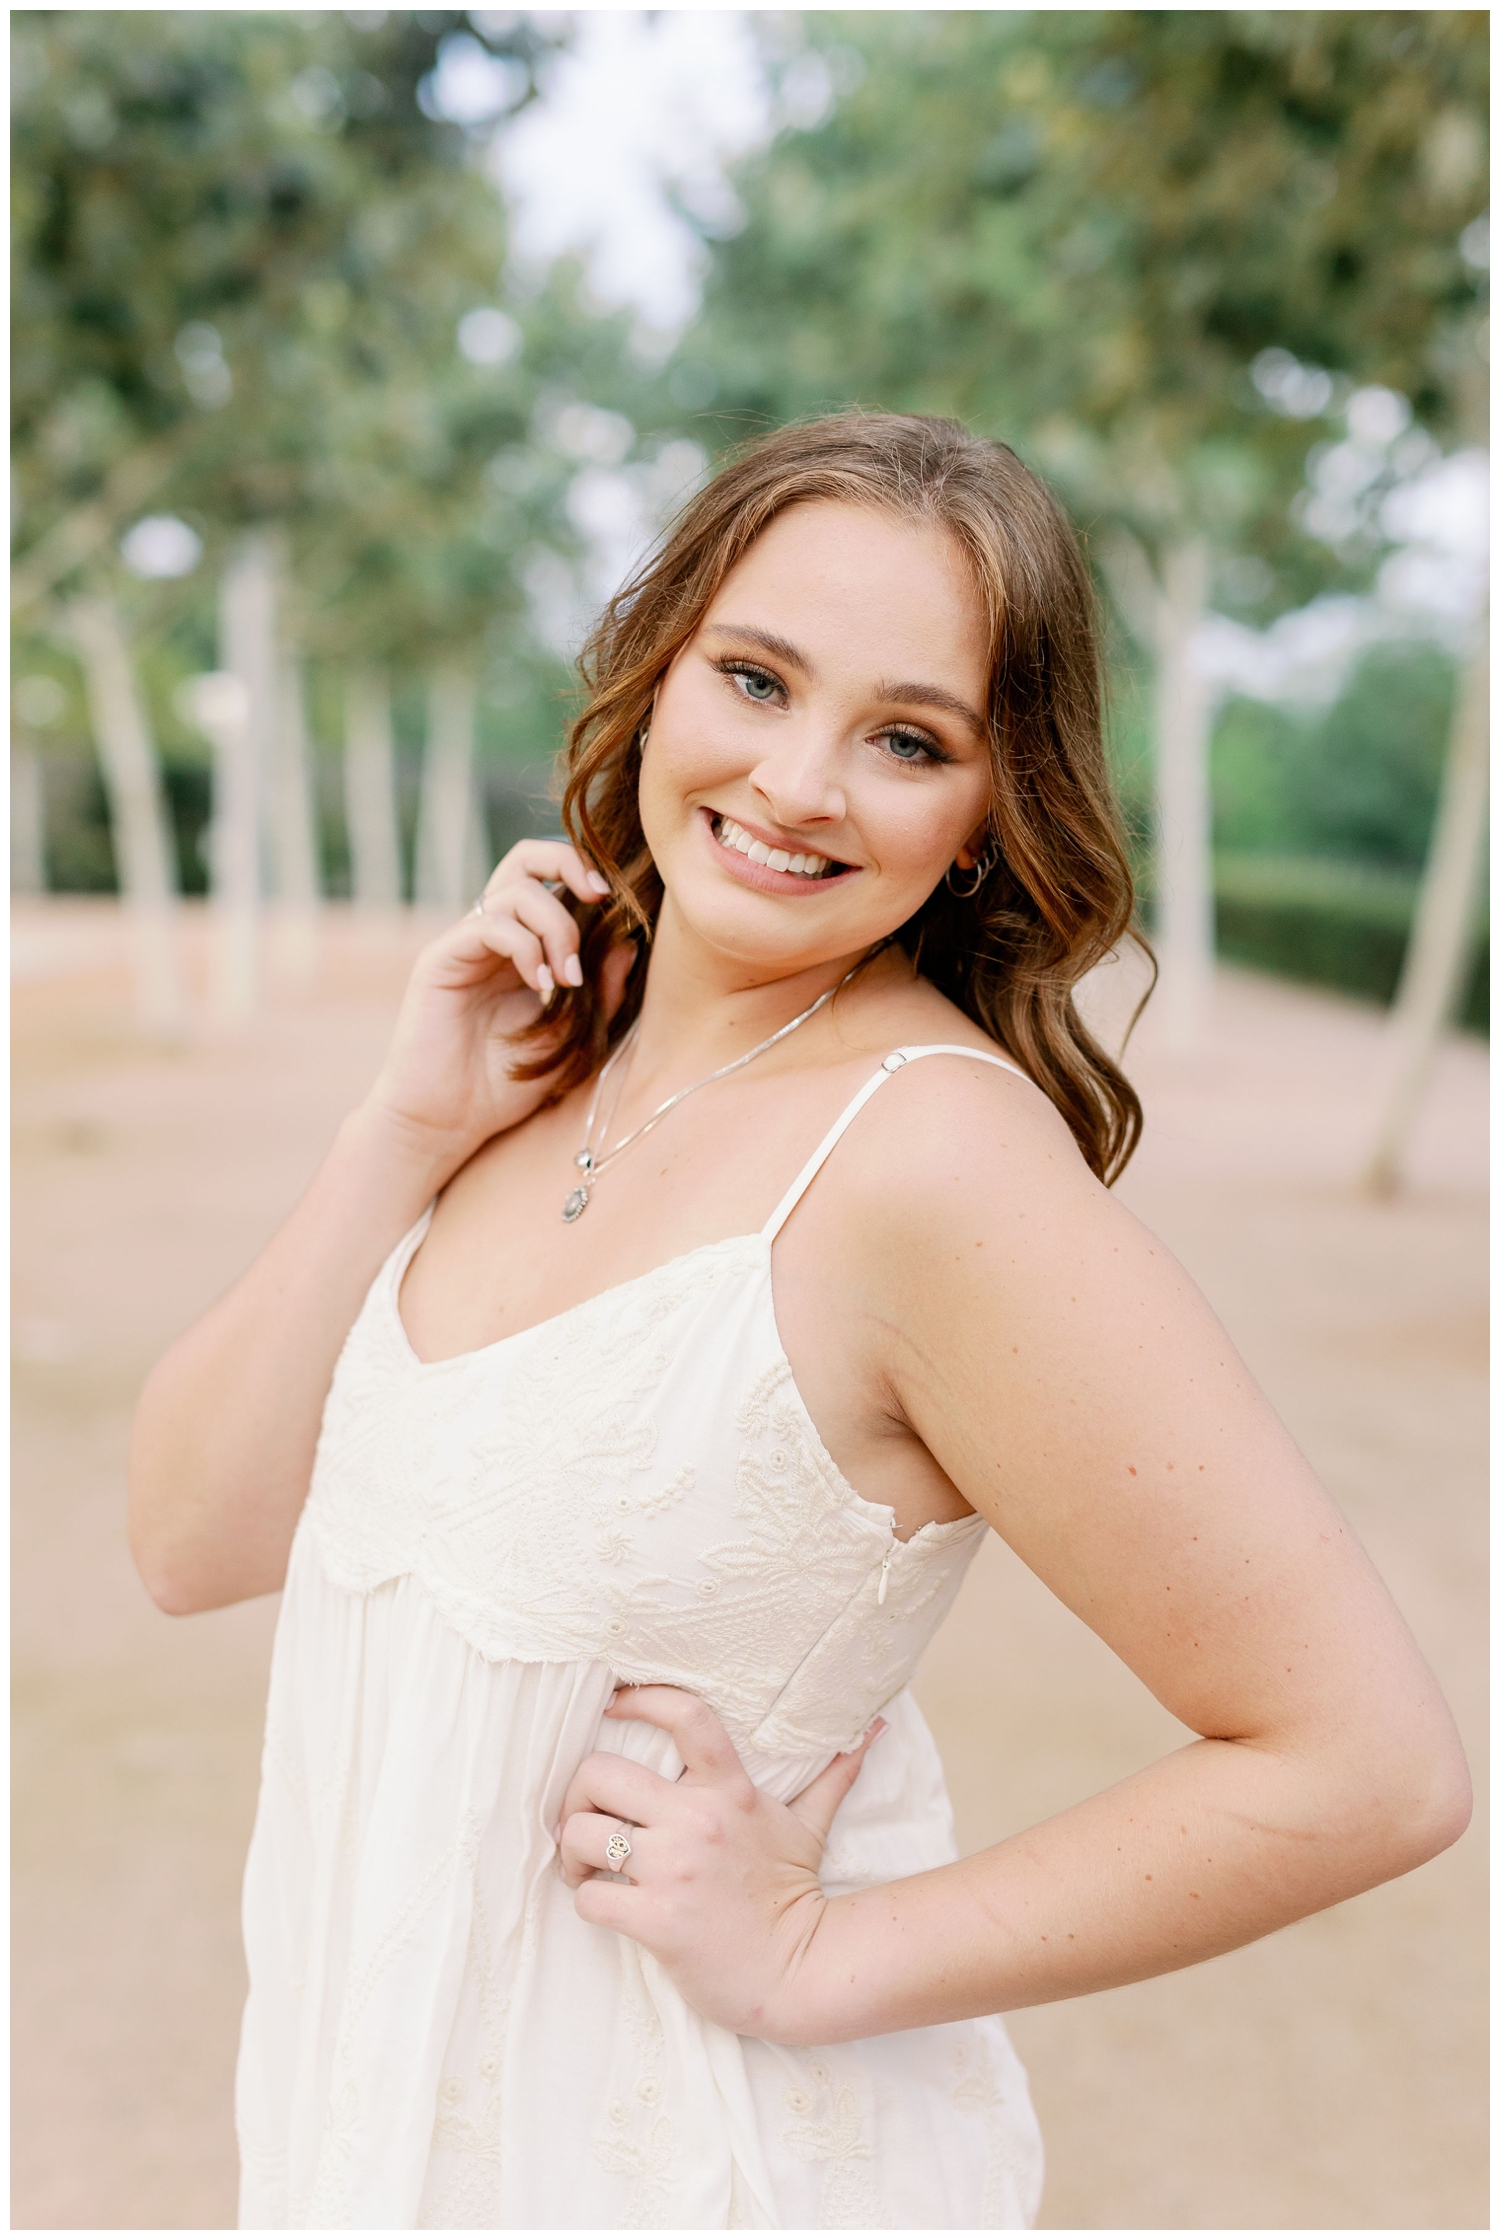 Senior pictures in Houston girl smiling at camera white dress